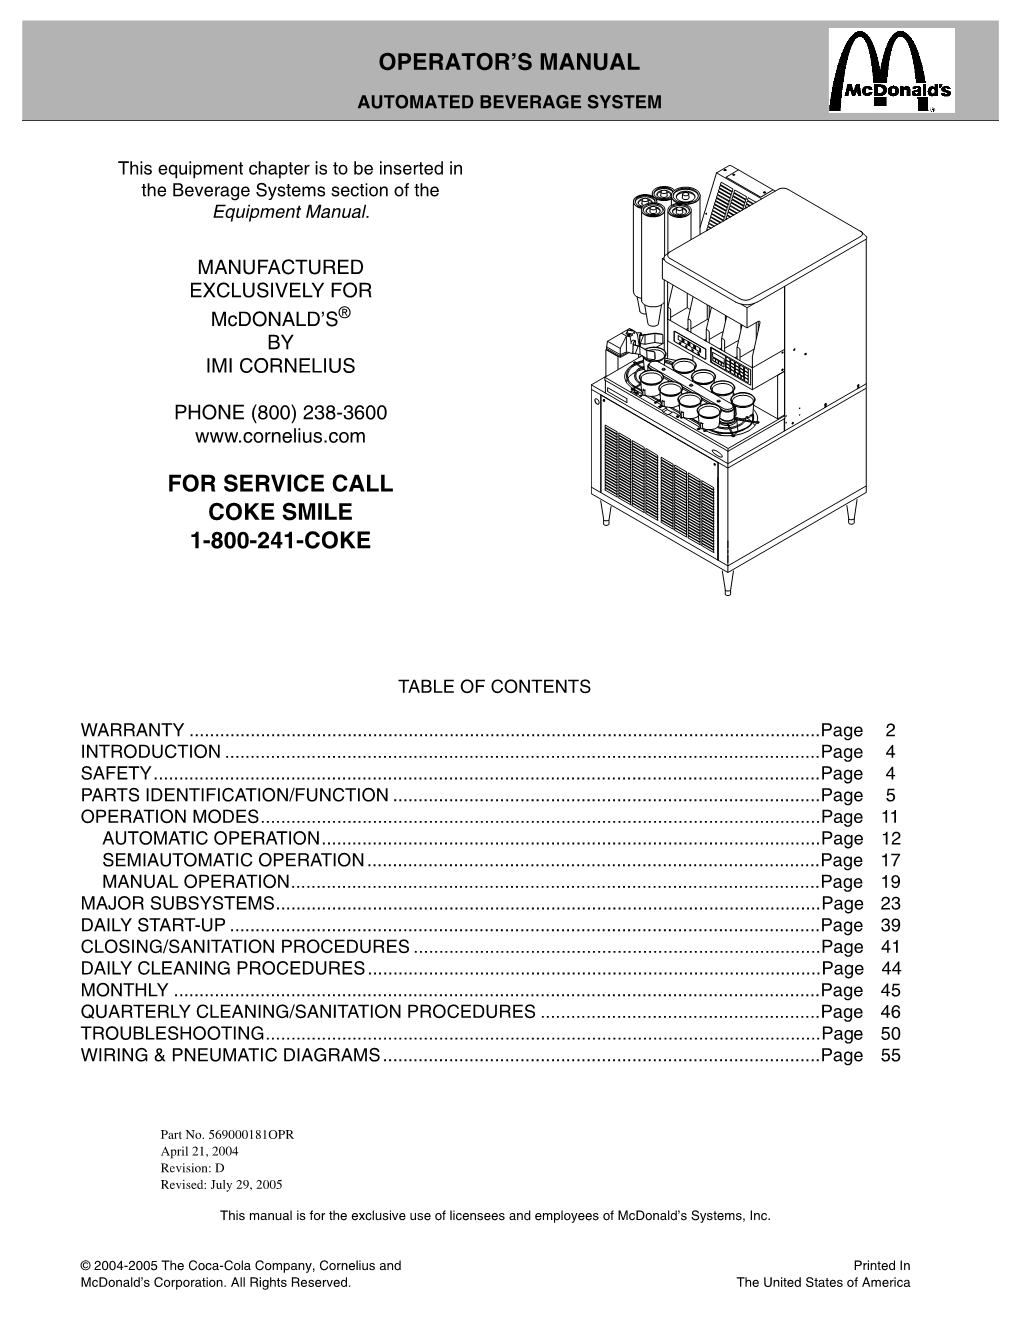 Operator's Manual for Service Call Coke Smile 1